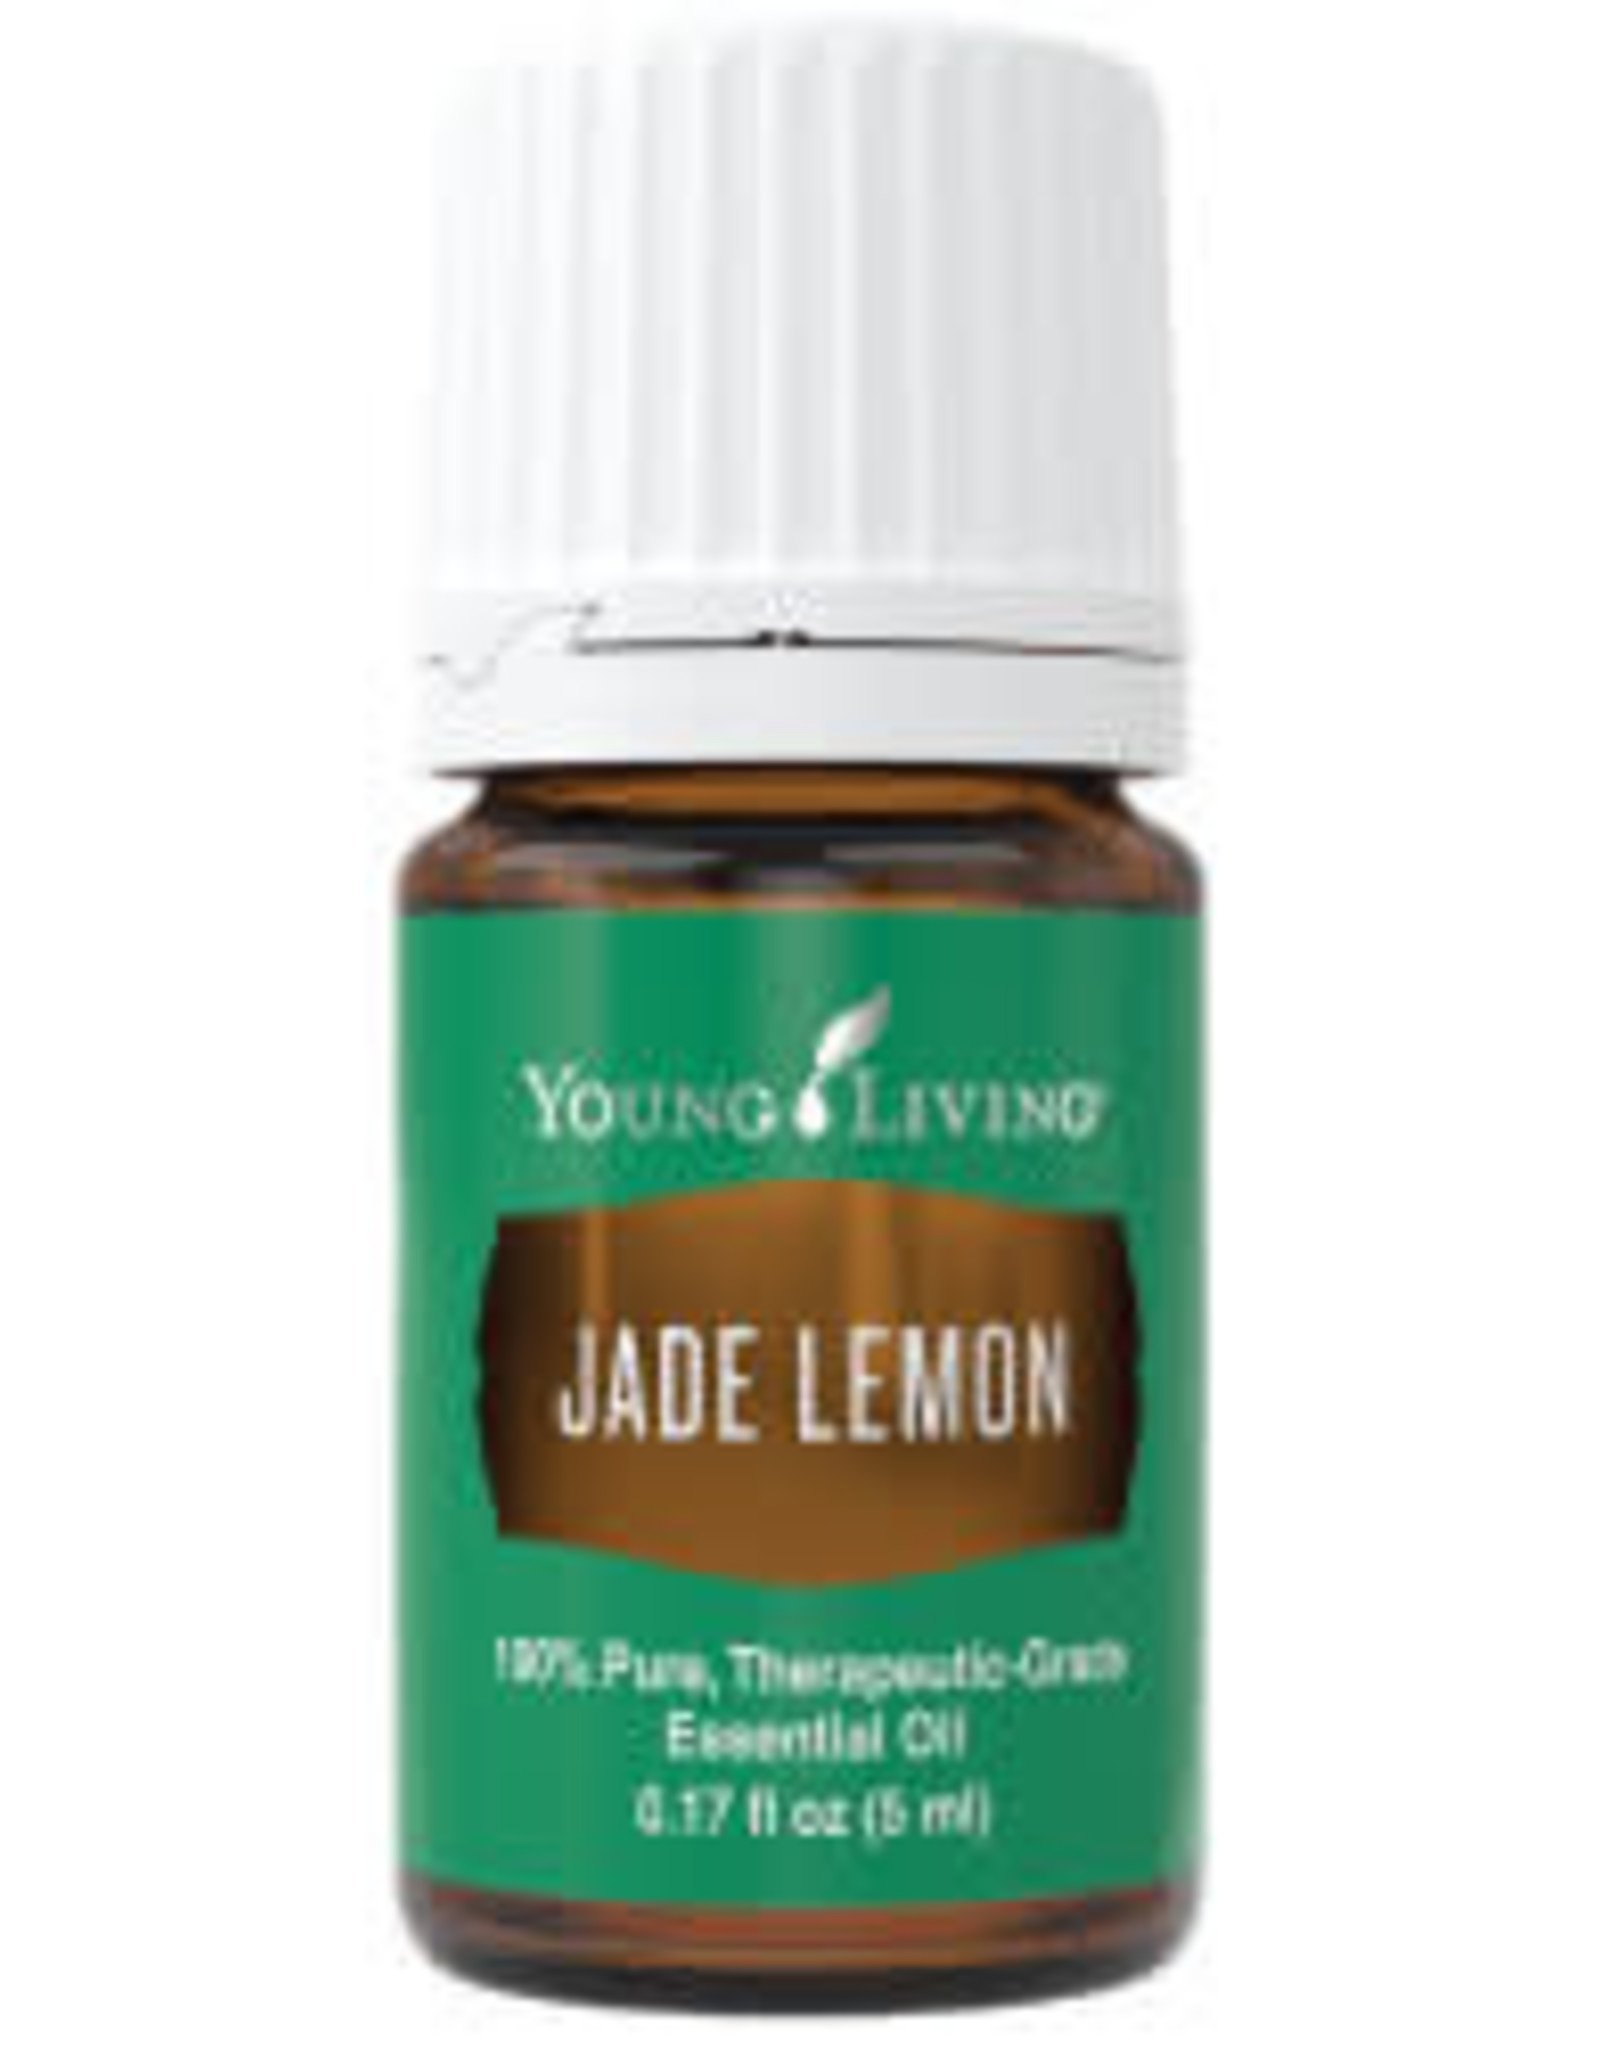 Young Living Jade Lemon Oil